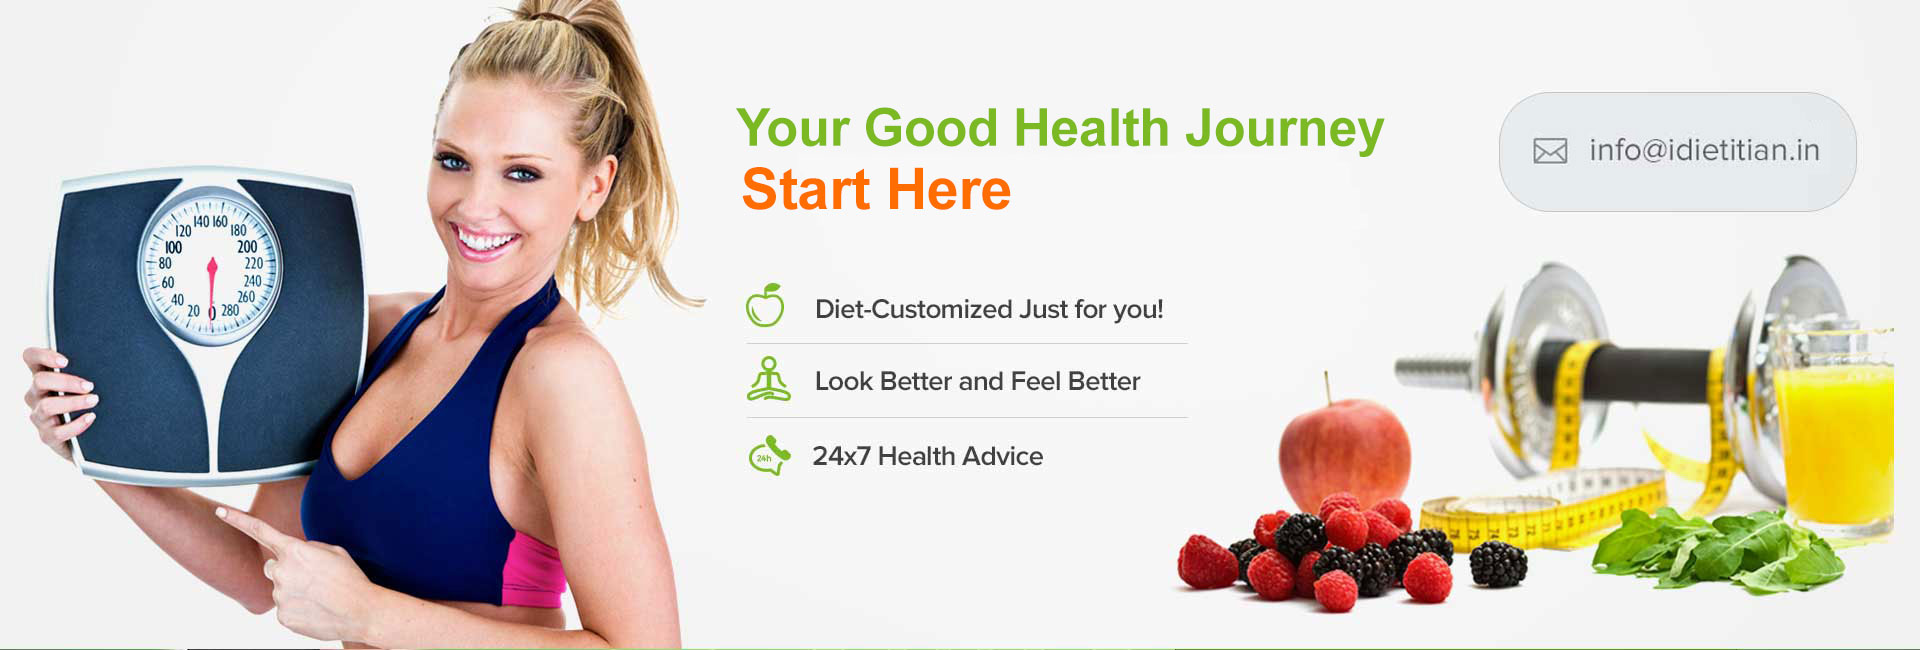 Online Diet Programs For Weight Loss - WeightLossLook